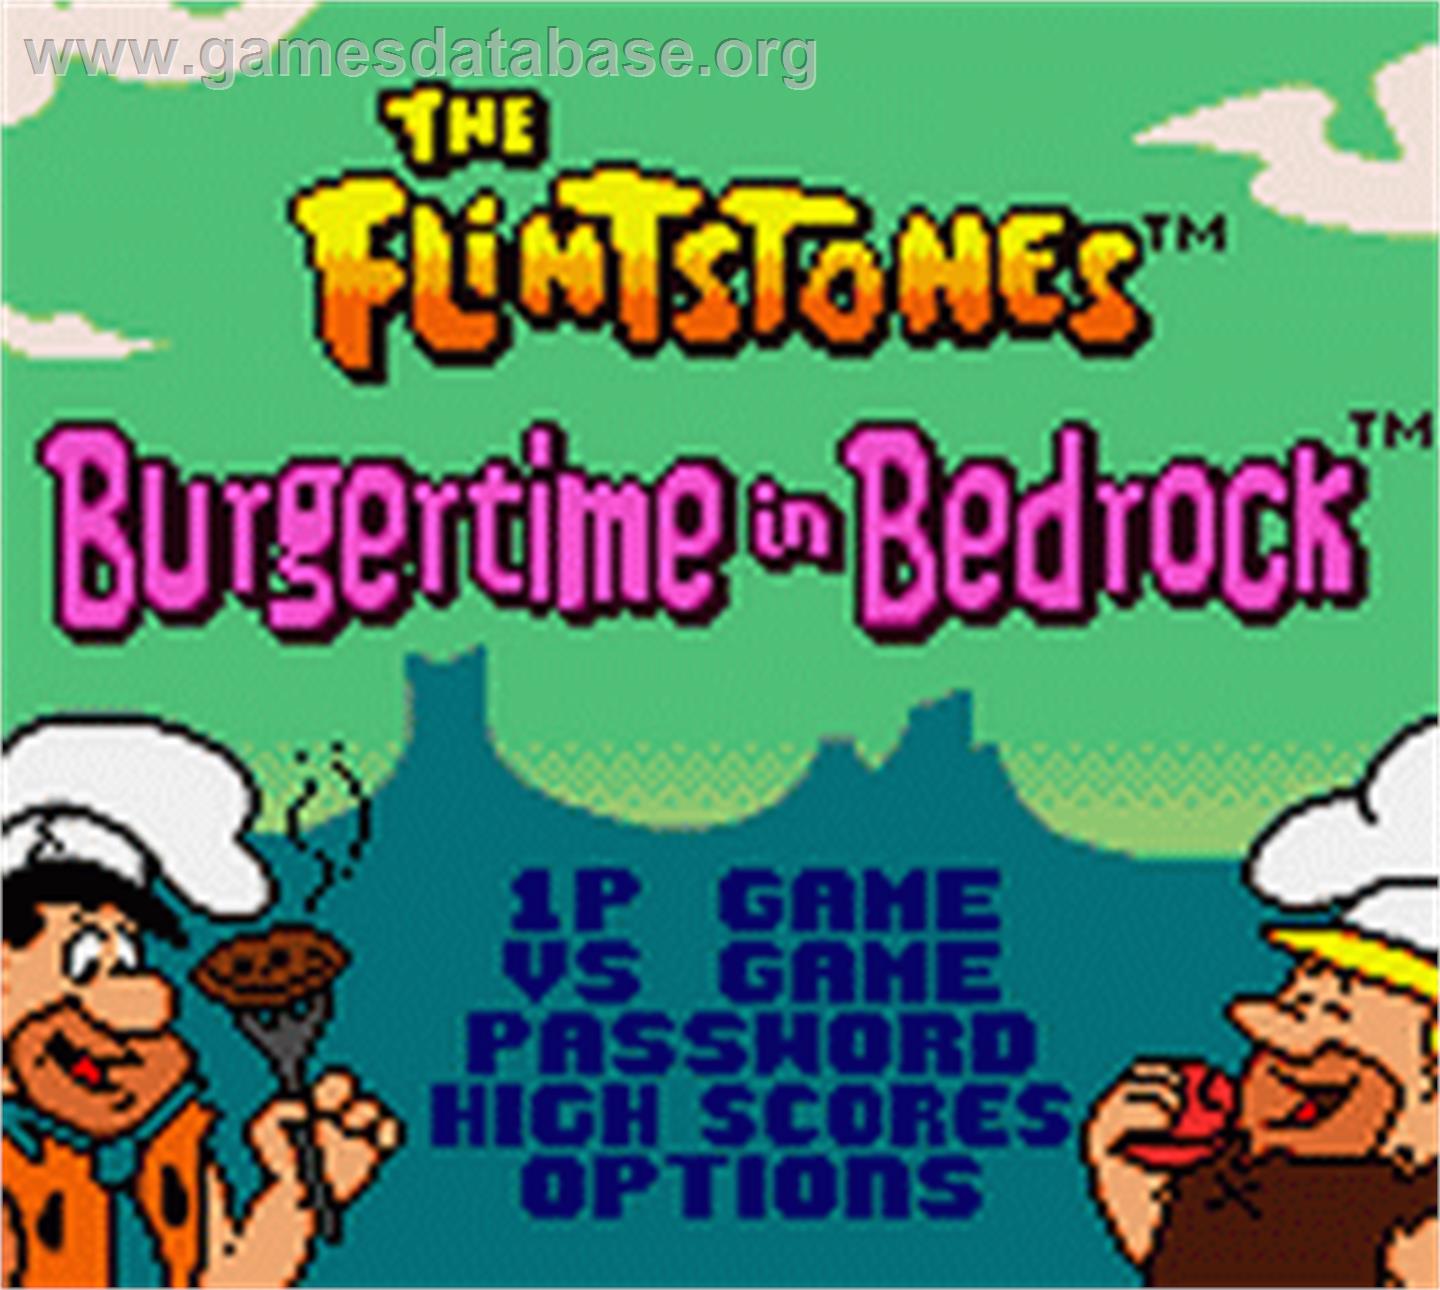 Flintstones: Burgertime in Bedrock - Nintendo Game Boy Color - Artwork - Title Screen